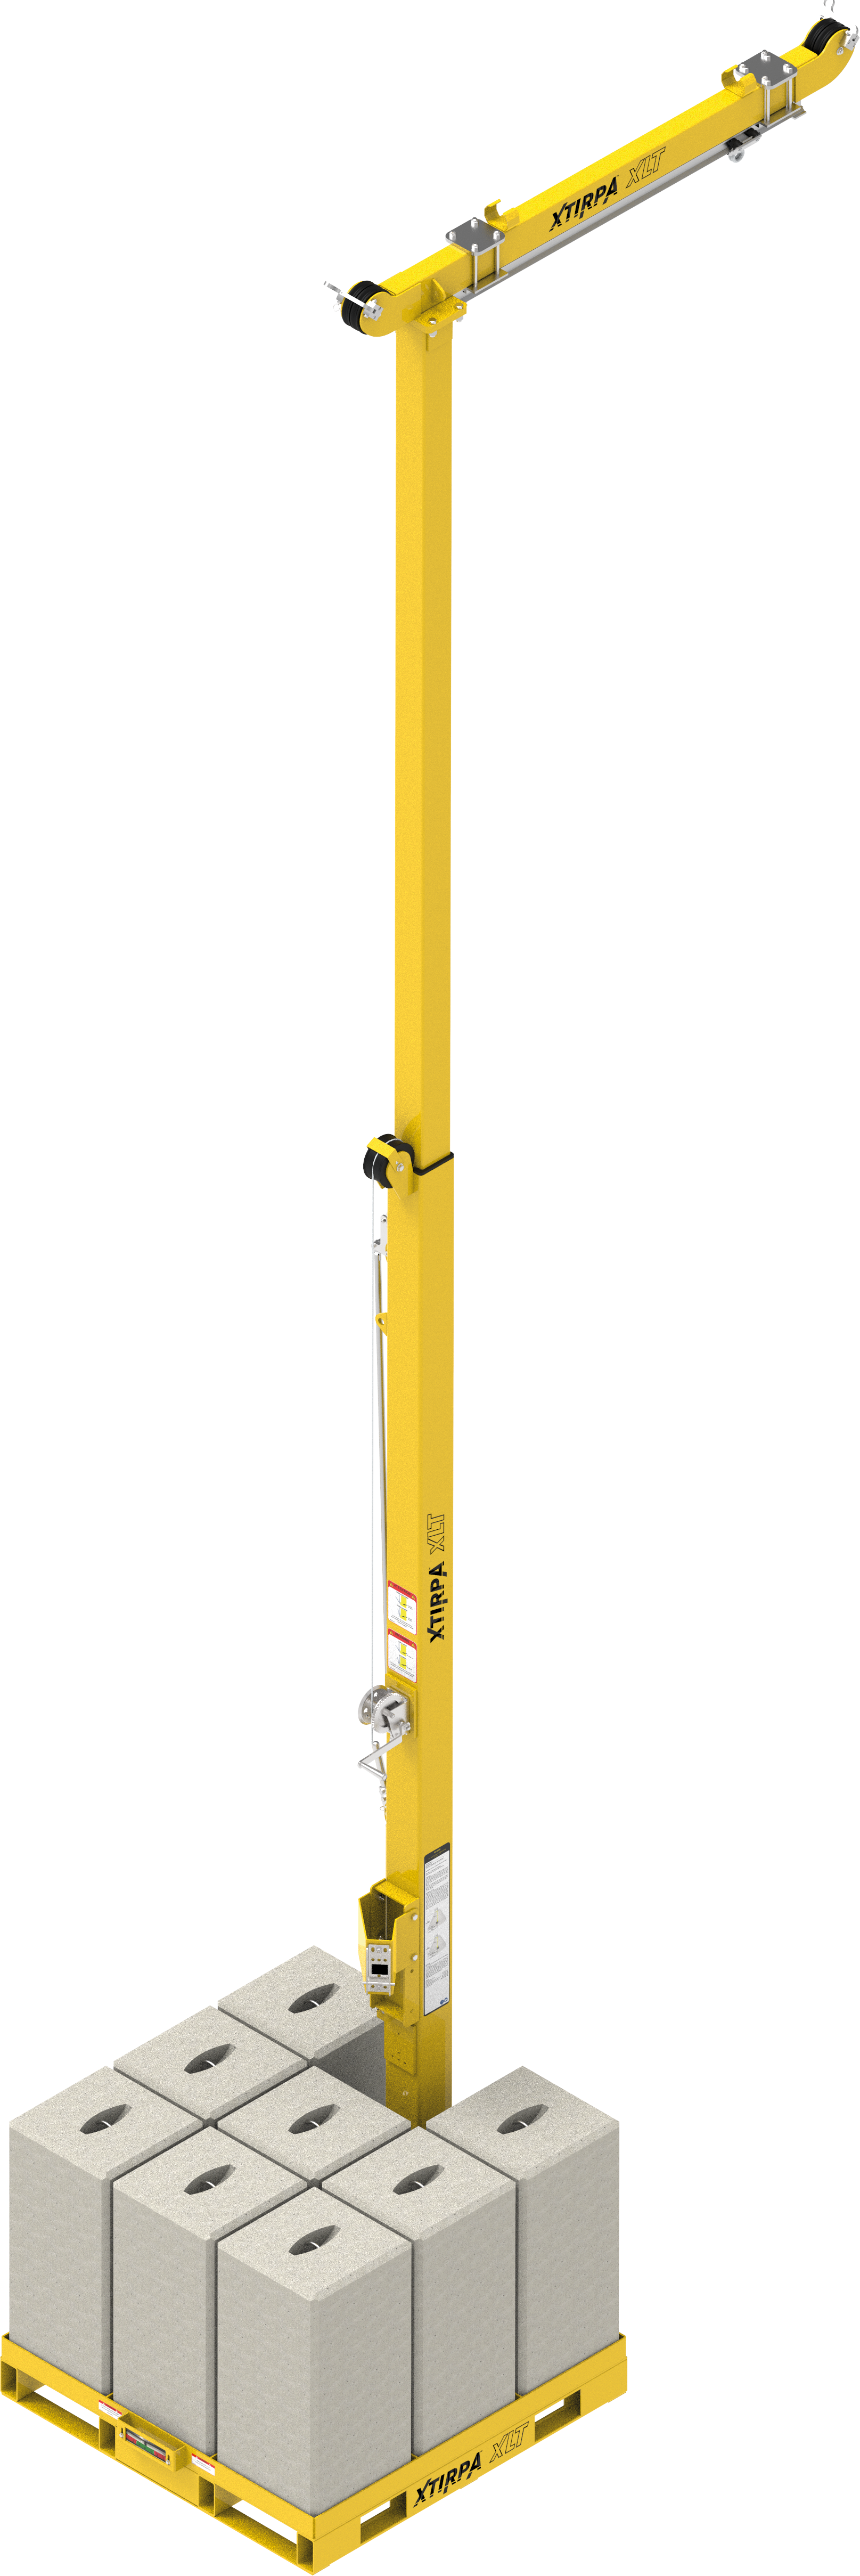 XLT Mast-davit arm system